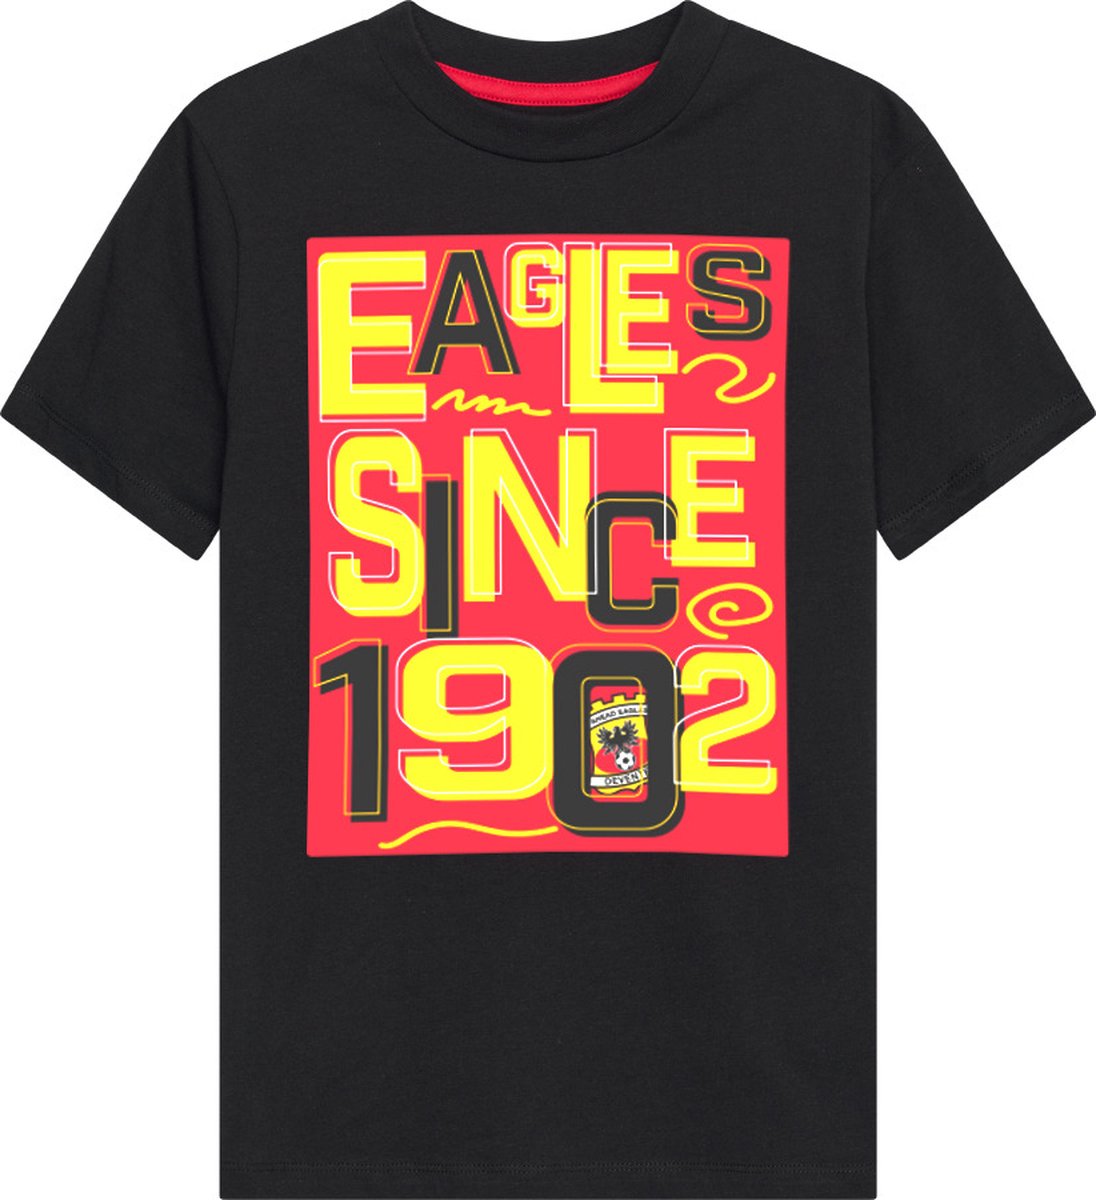 Eagles kids T-shirt - Voetbalshirts kinderen - Go Ahead Eagles - maat 98